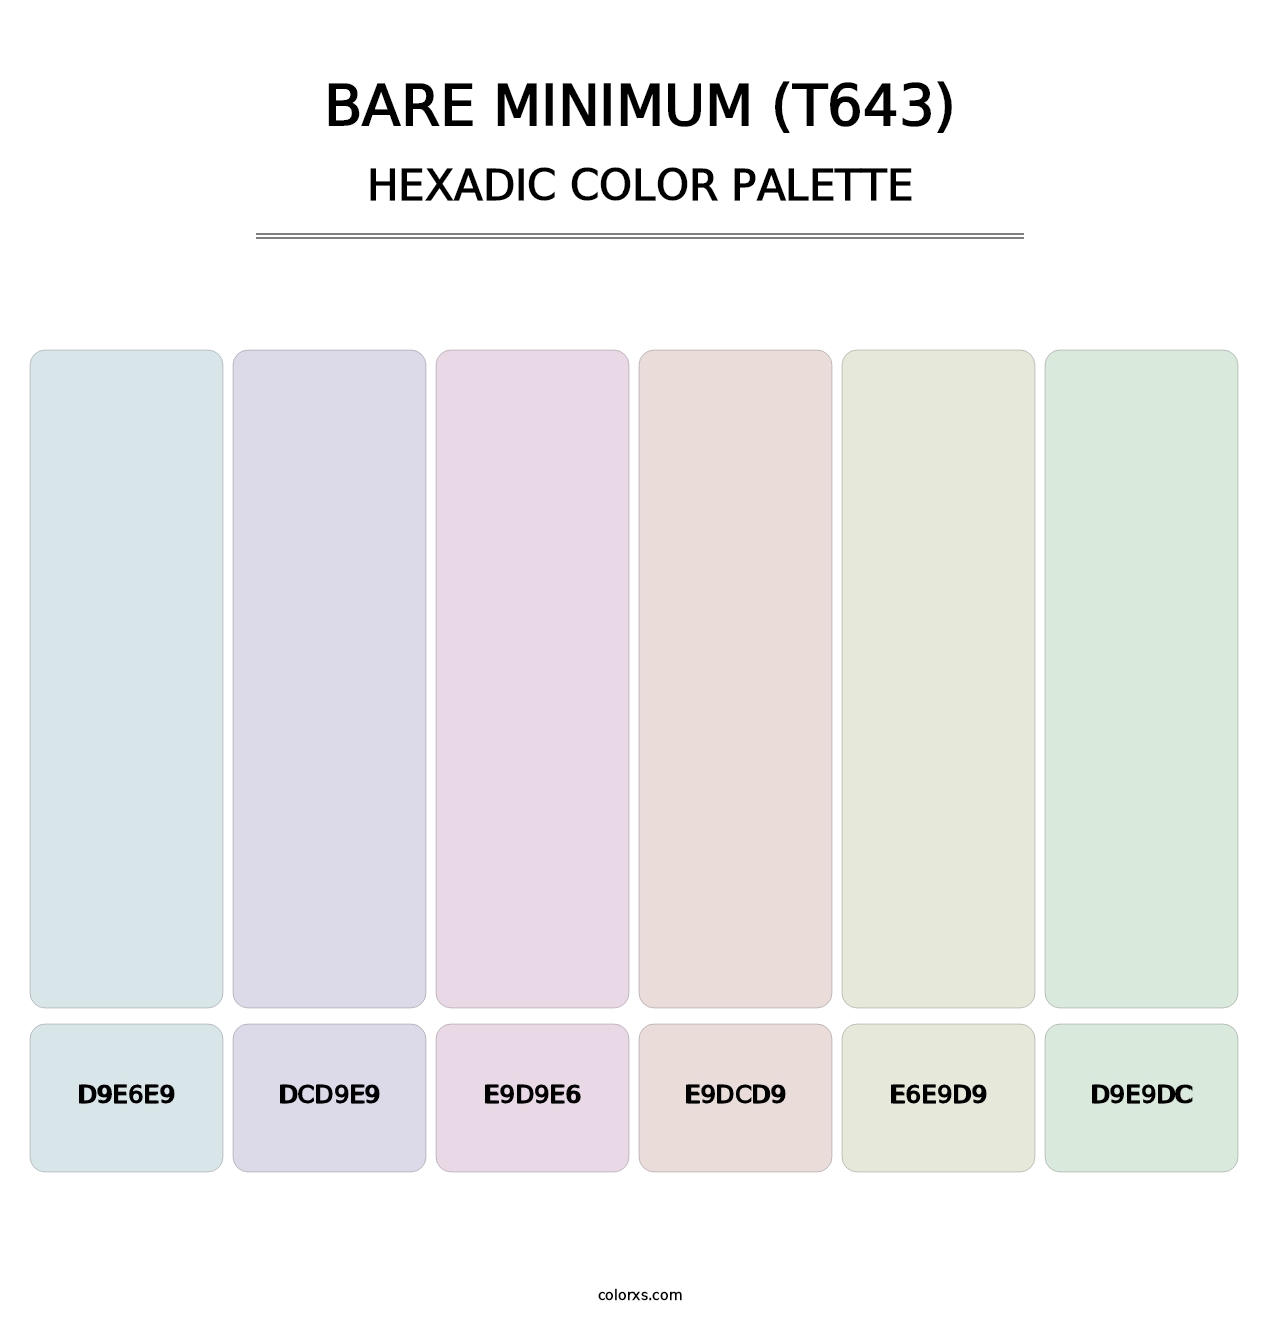 Bare Minimum (T643) - Hexadic Color Palette